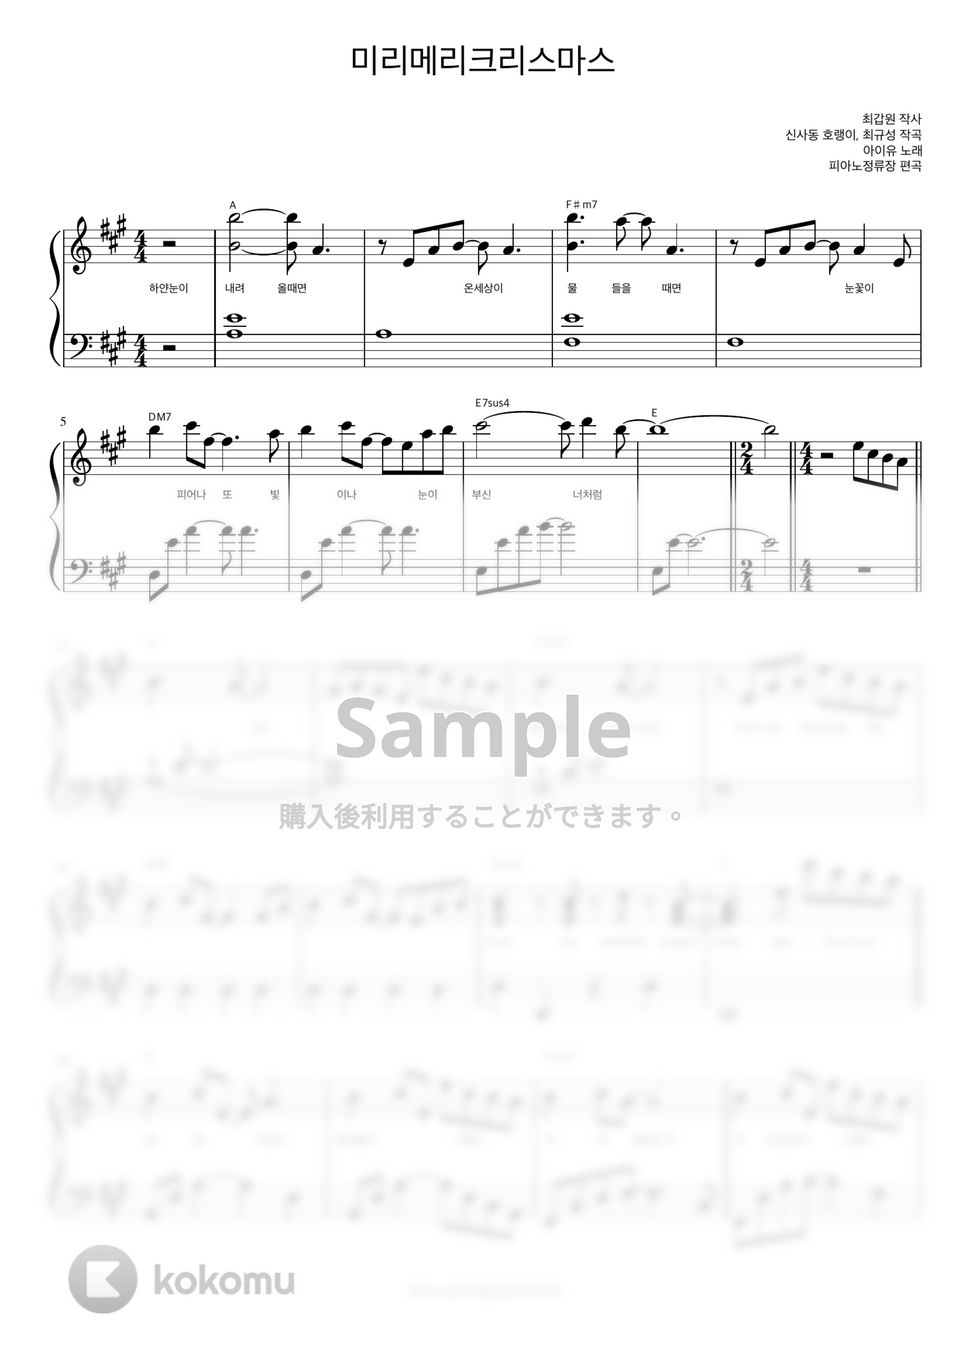 IU - Merry Christmas In Advance (伴奏楽譜) by 피아노정류장